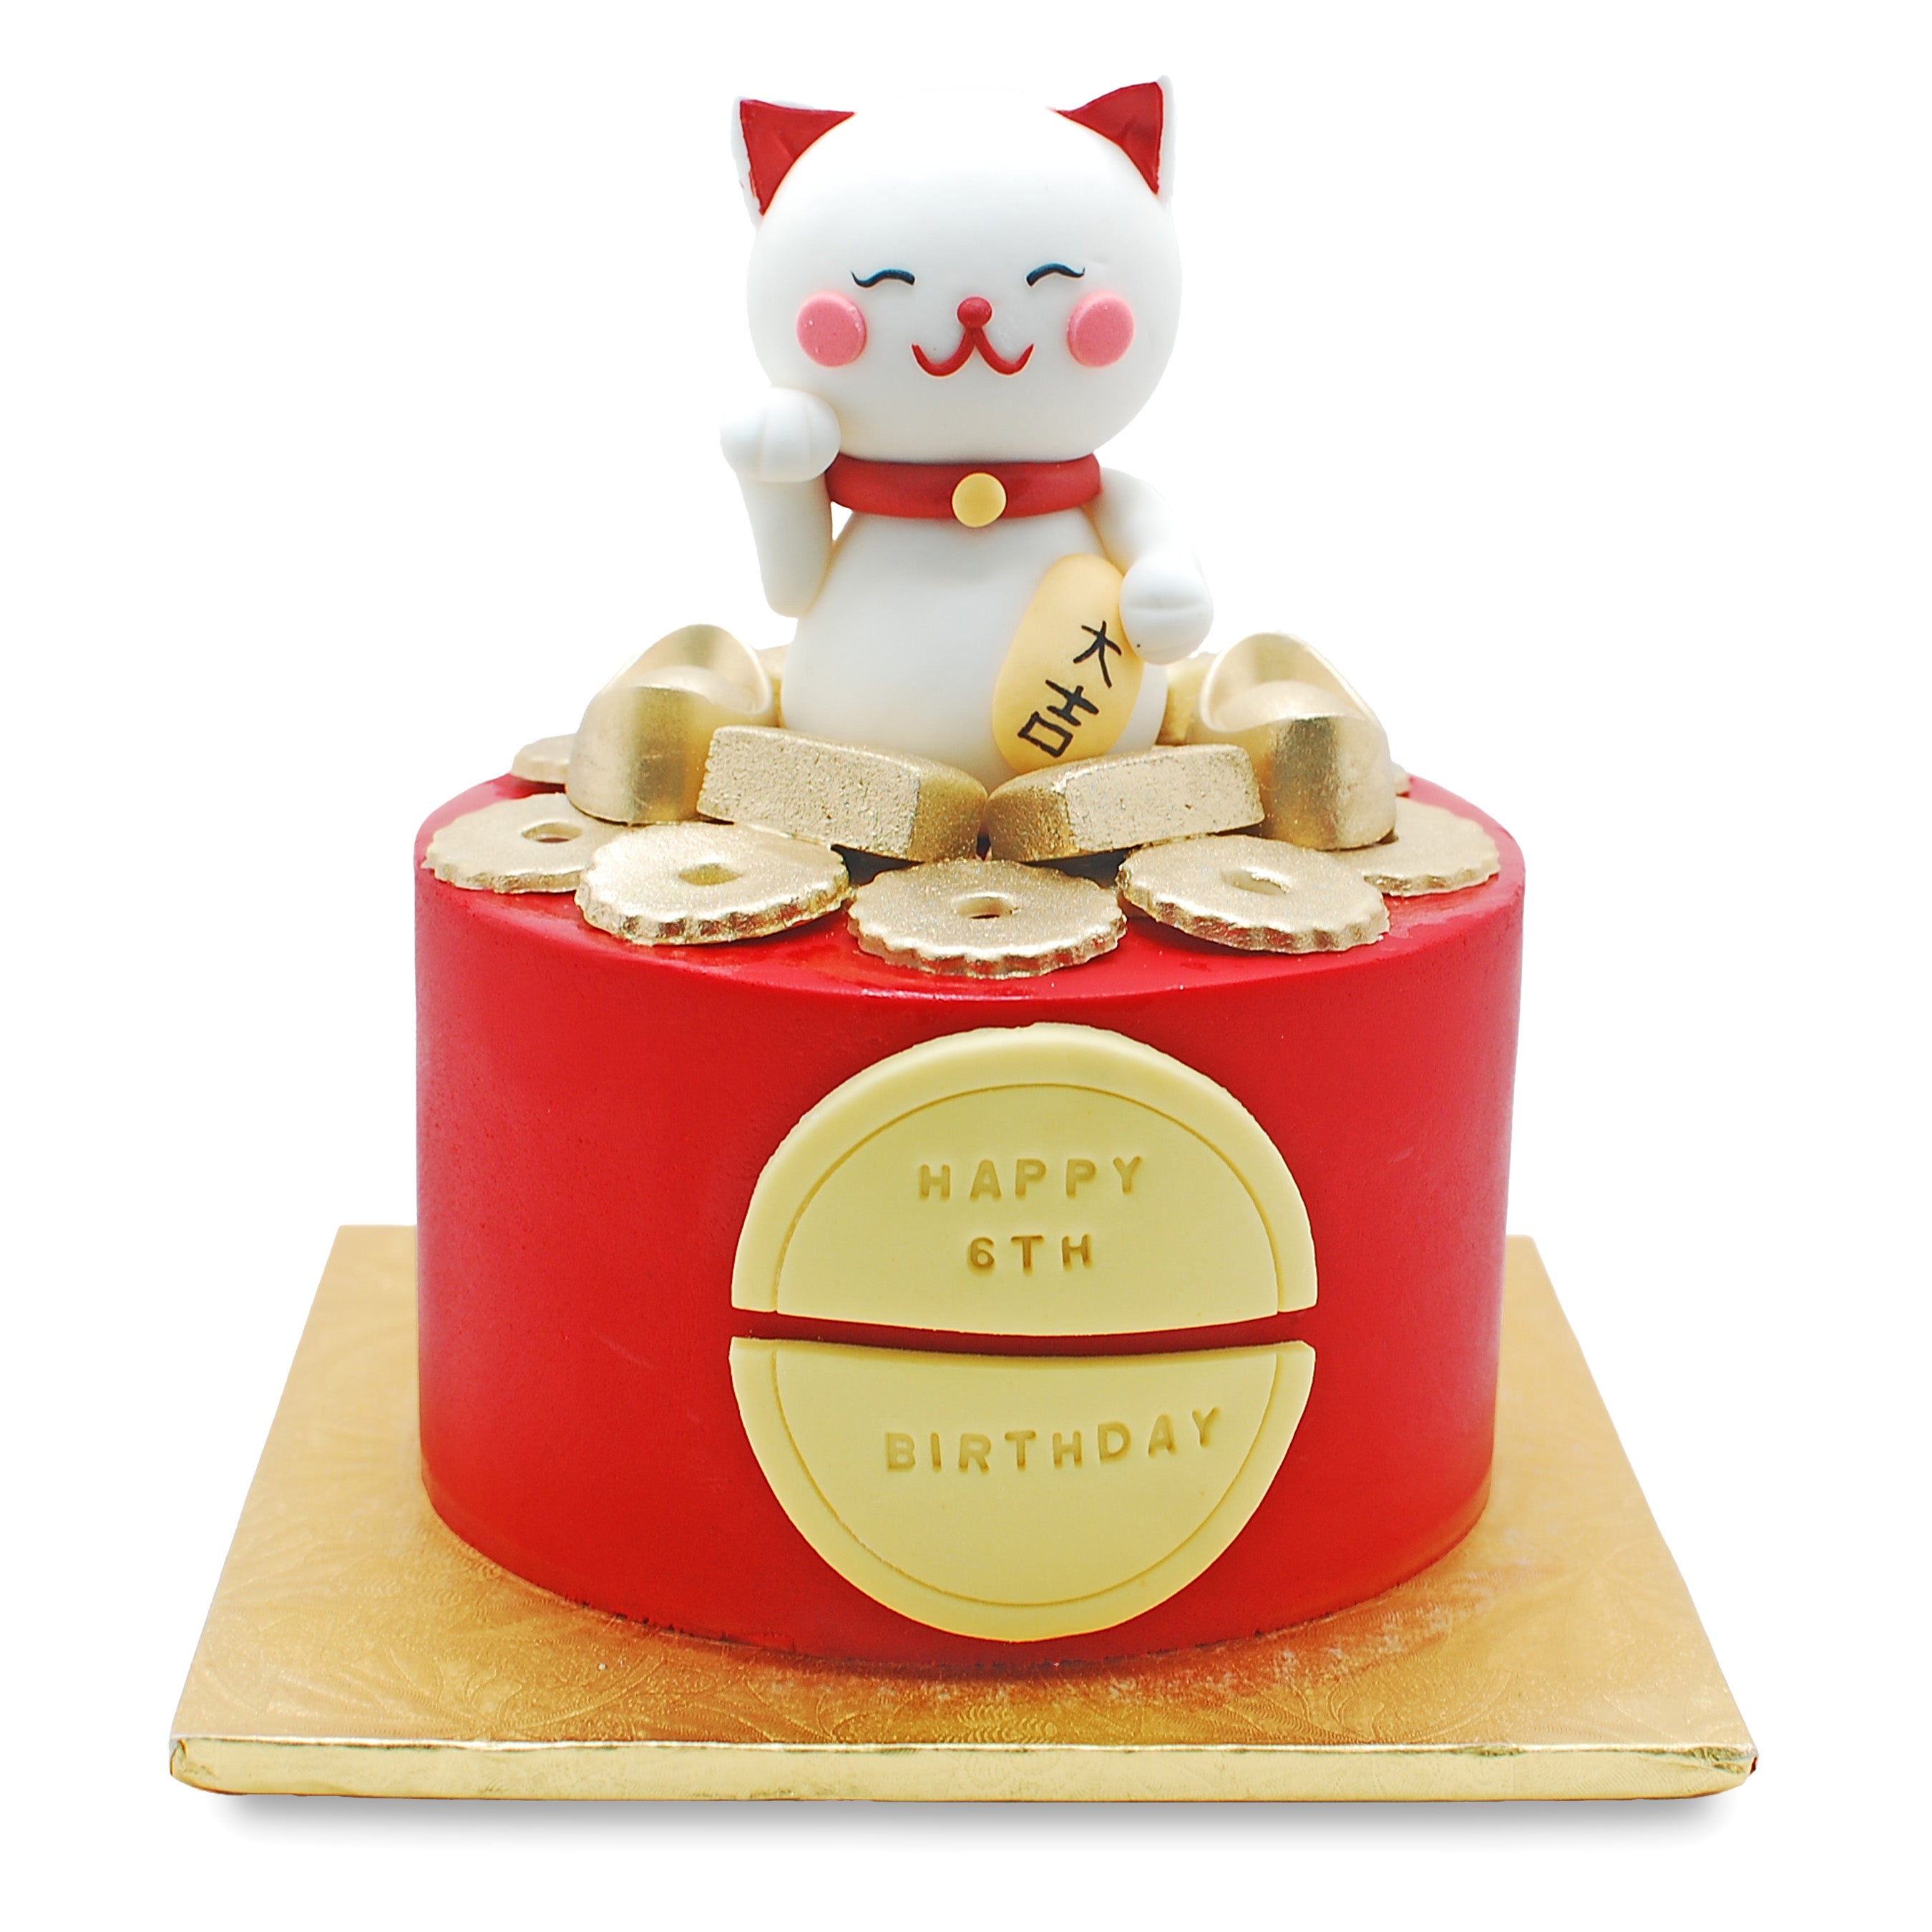 JS Bakery Store】Lucky Cat Cake Topper 招财猫蛋糕装饰| Shopee Malaysia